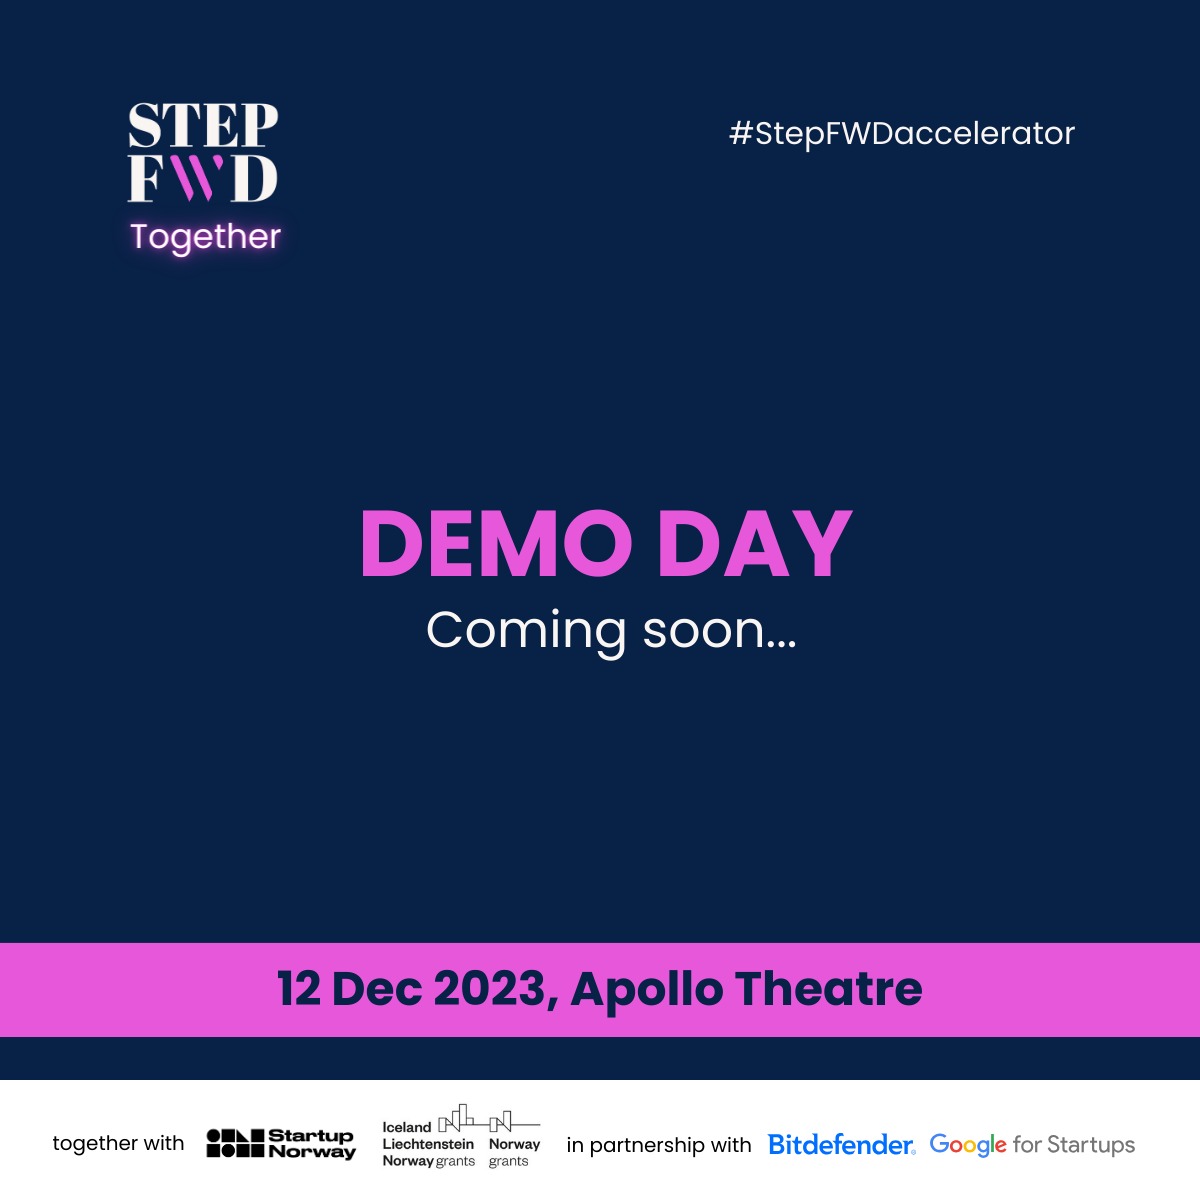 vizual DemoDay StepFWD